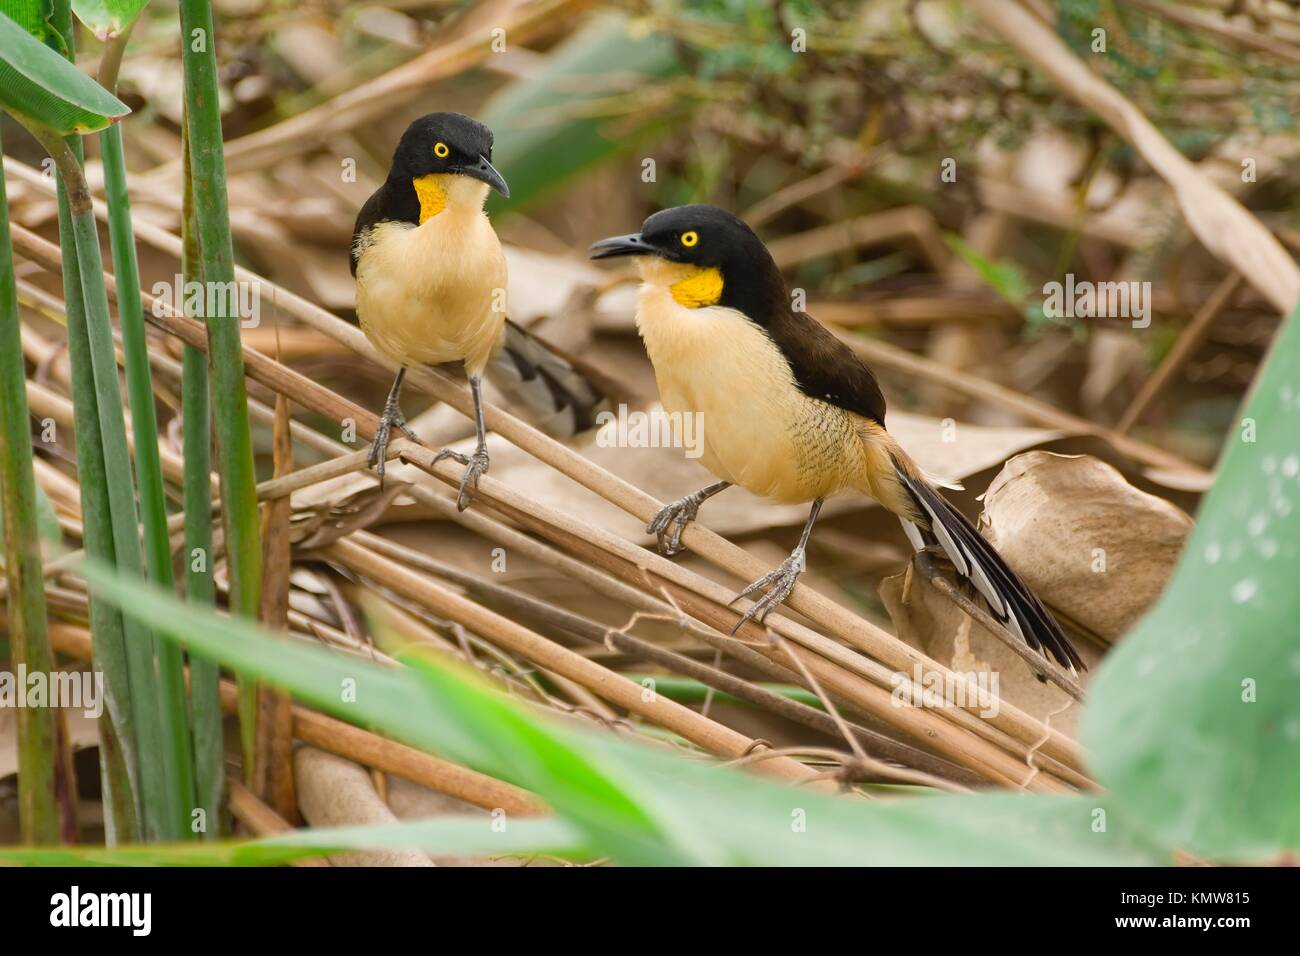 Black-capped Donacobius, Pantanal, Mato Grosso, Brazil / Donacobius atricapilla, Donacobius atricapillus - Troglodytidae family – Passeriformes order Stock Photo